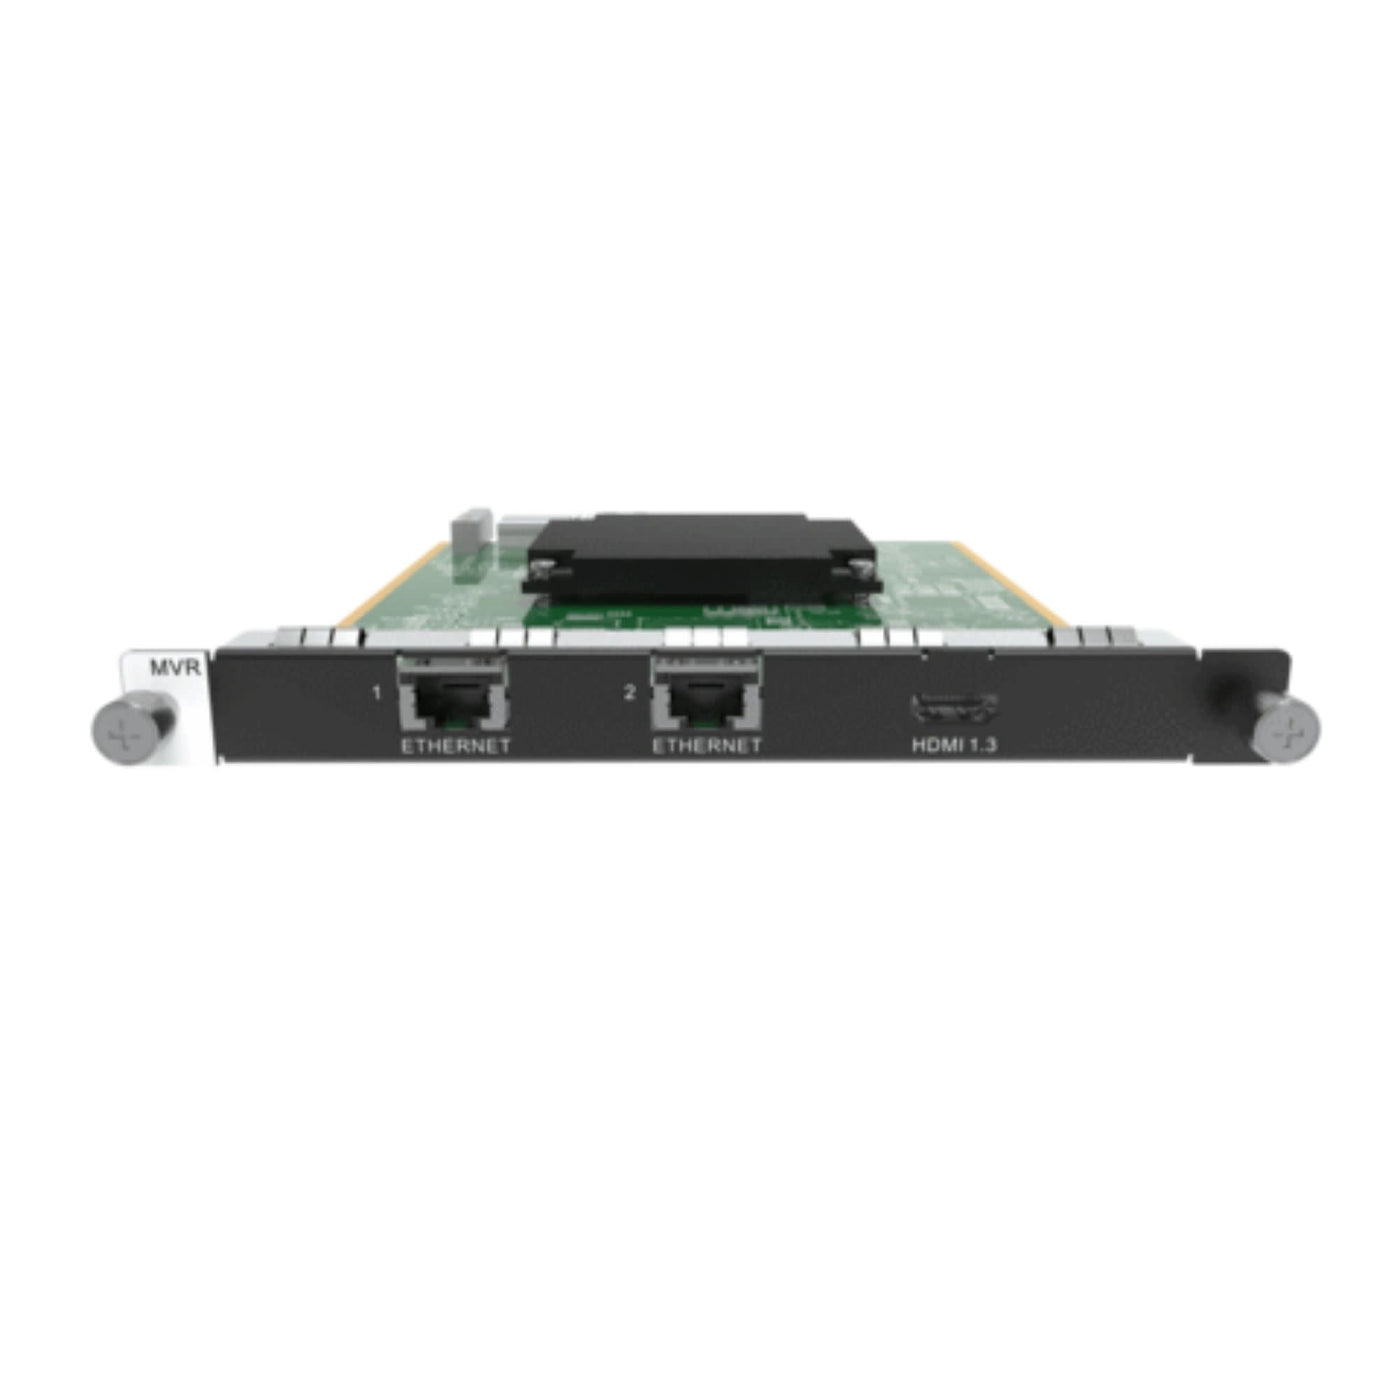 NovaStar 124303 H_2xRJ45+1xHDMI1.3 H Series 2x Ethernet and 1x HDMI1.3 for Monitoring